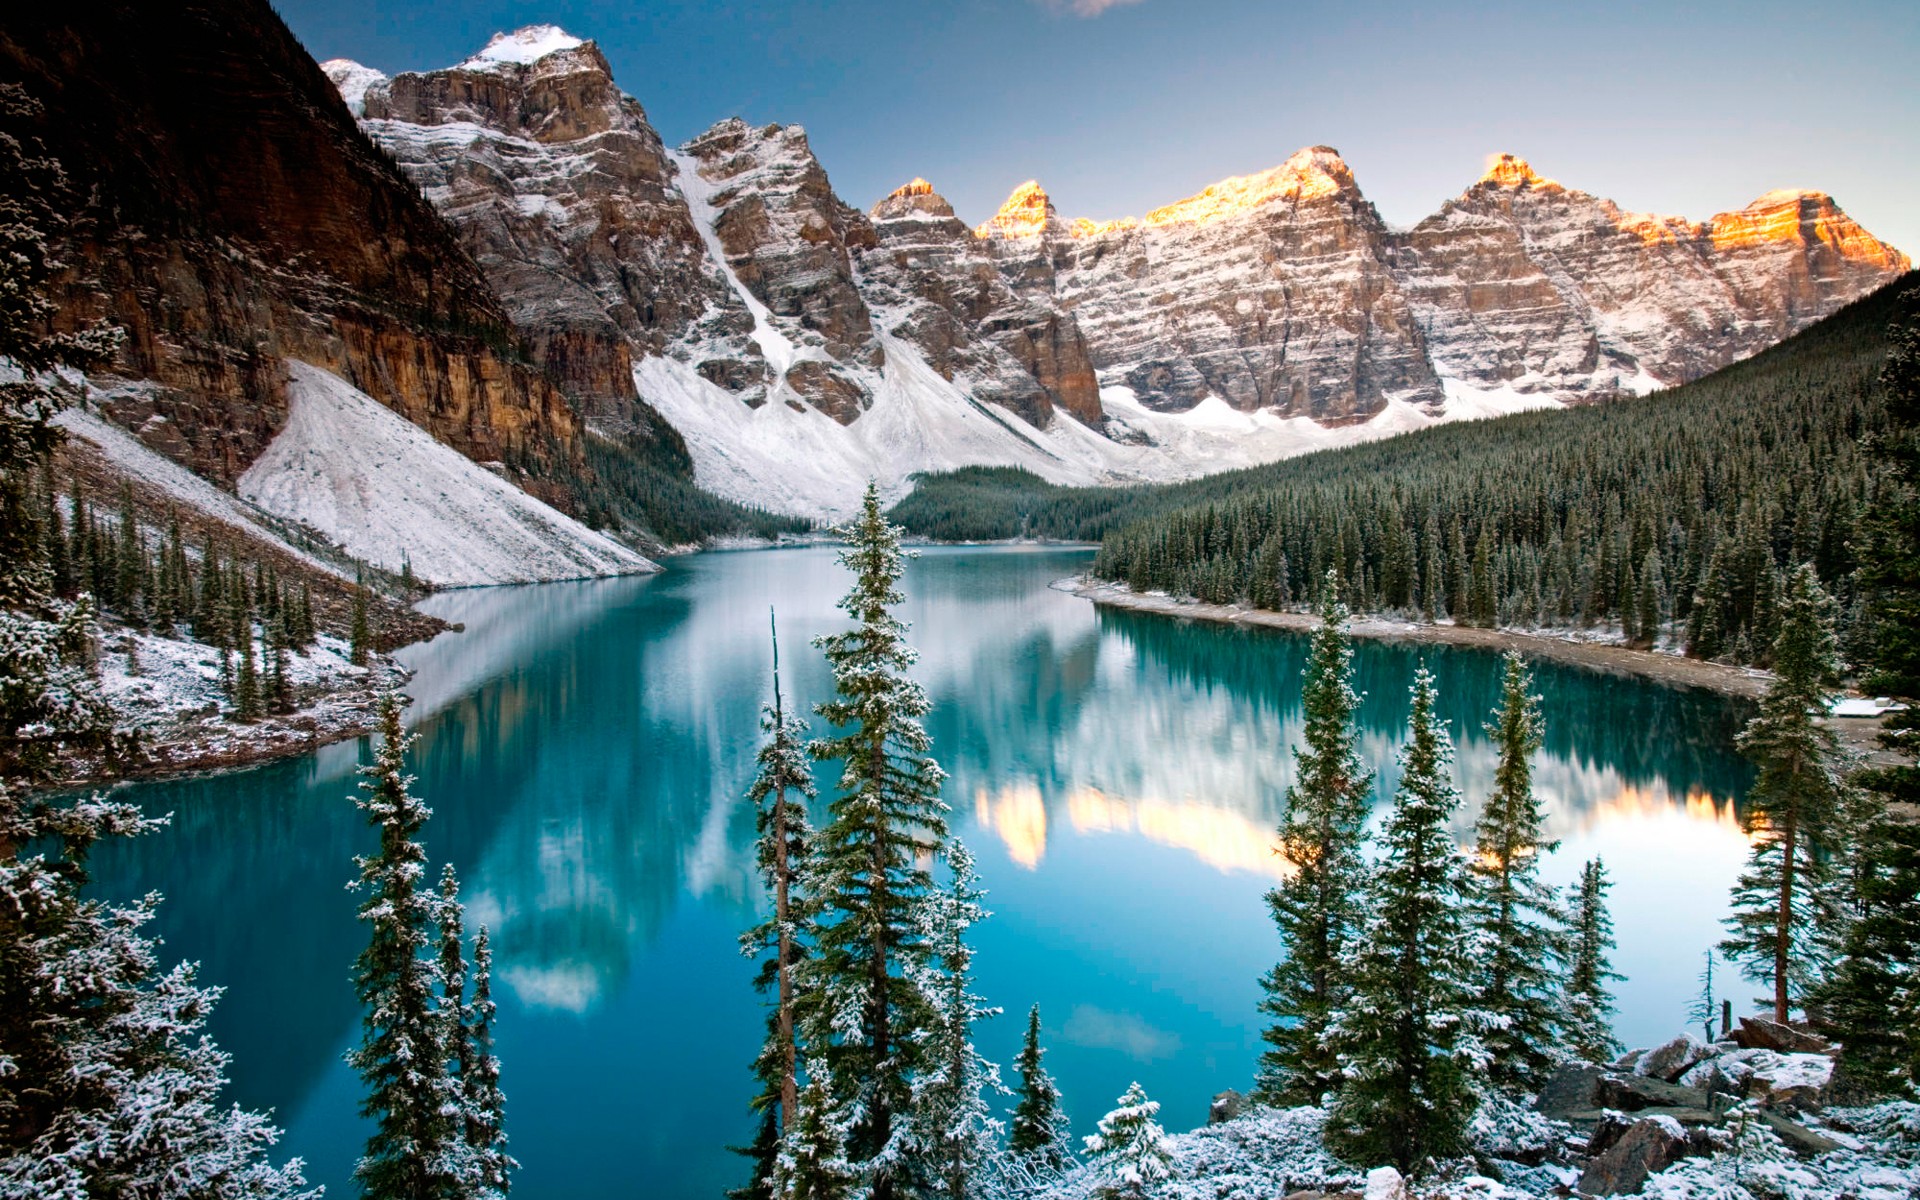 moraine-lake-winter-banff-national-park-alberta-canada-nature-images-banff-national-park-hd-wallpaper